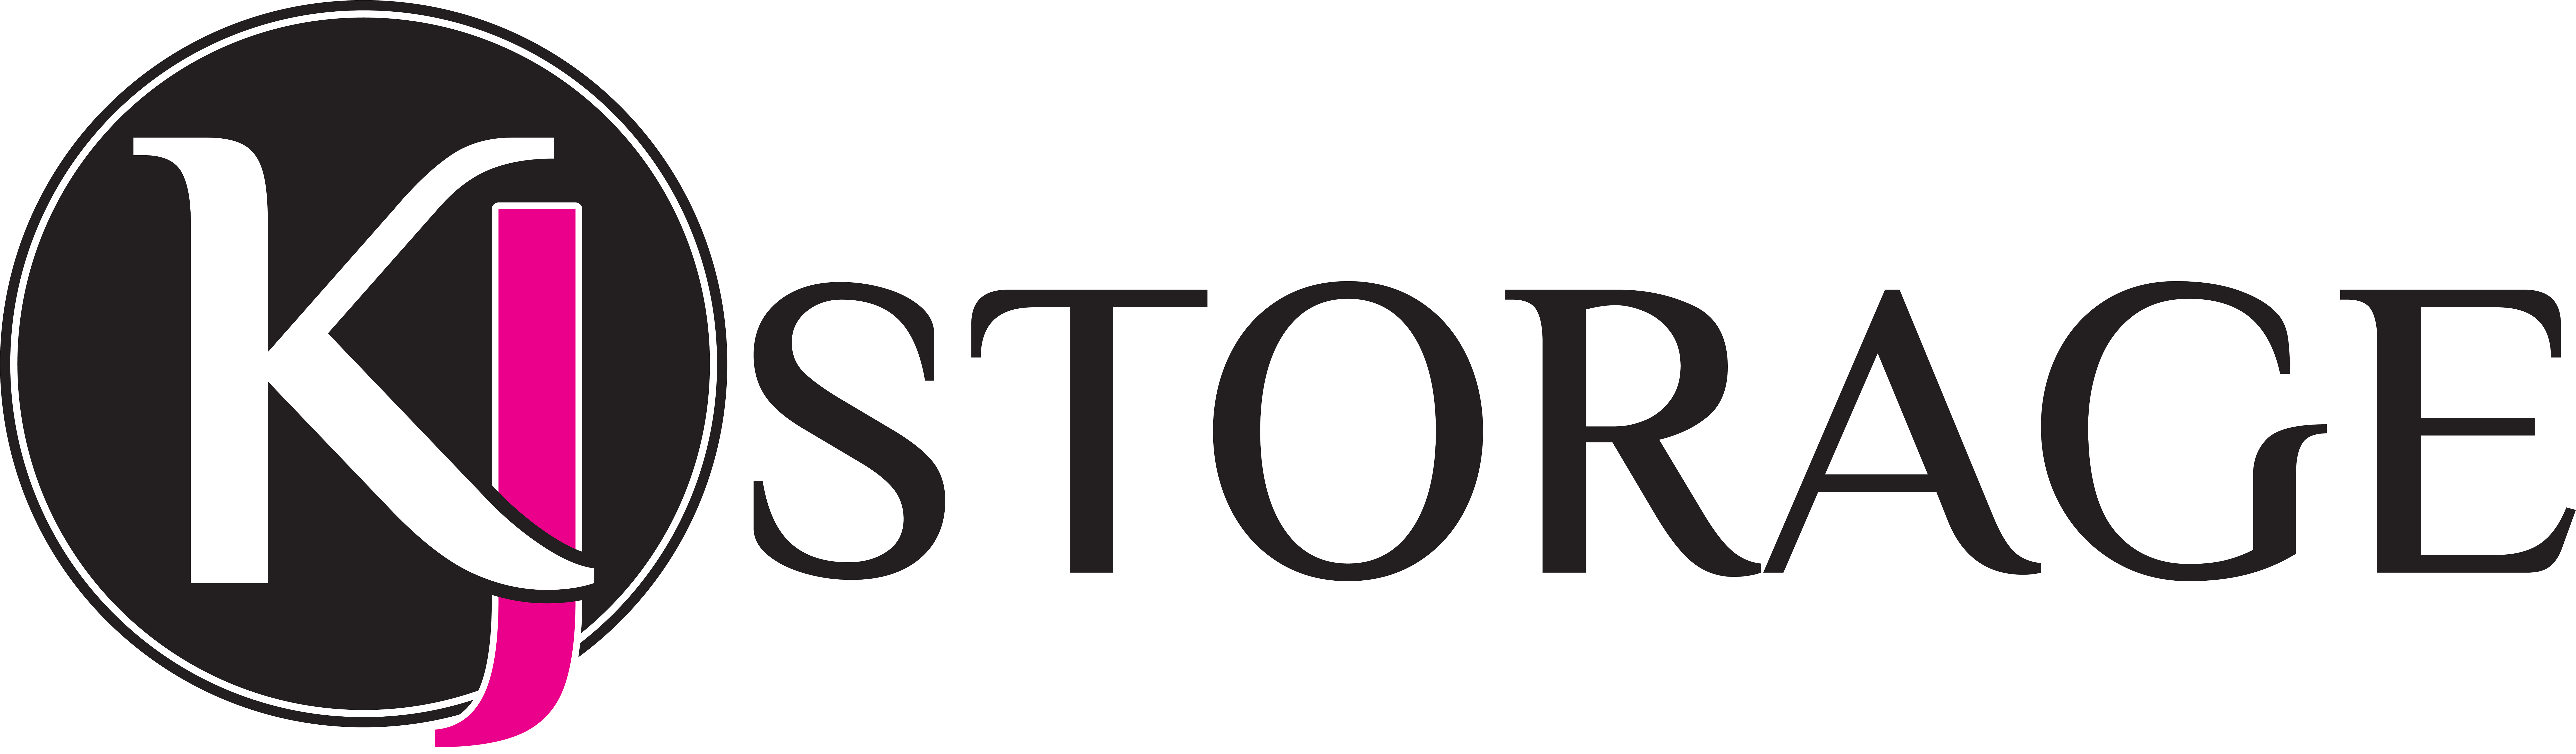 KJ Storage Logo